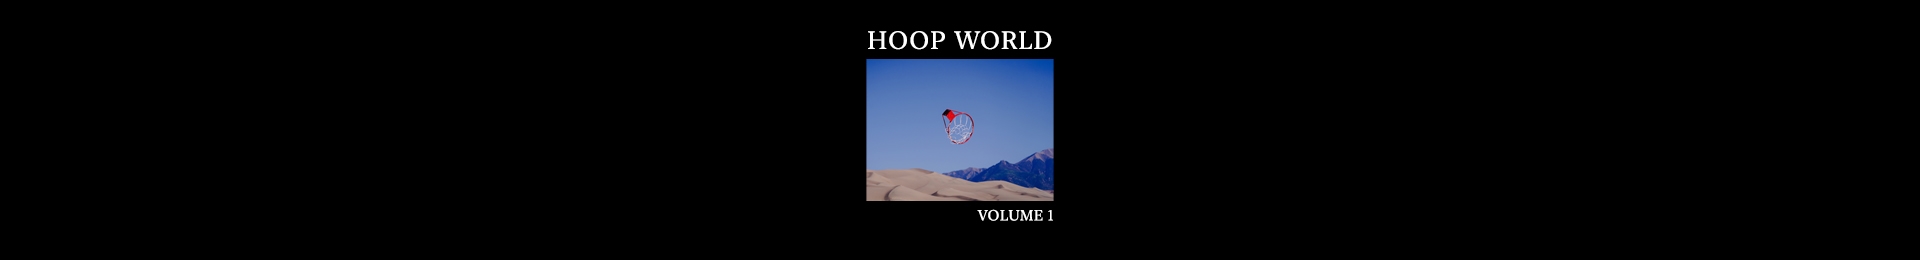 Hoop World Vol. 1 banner